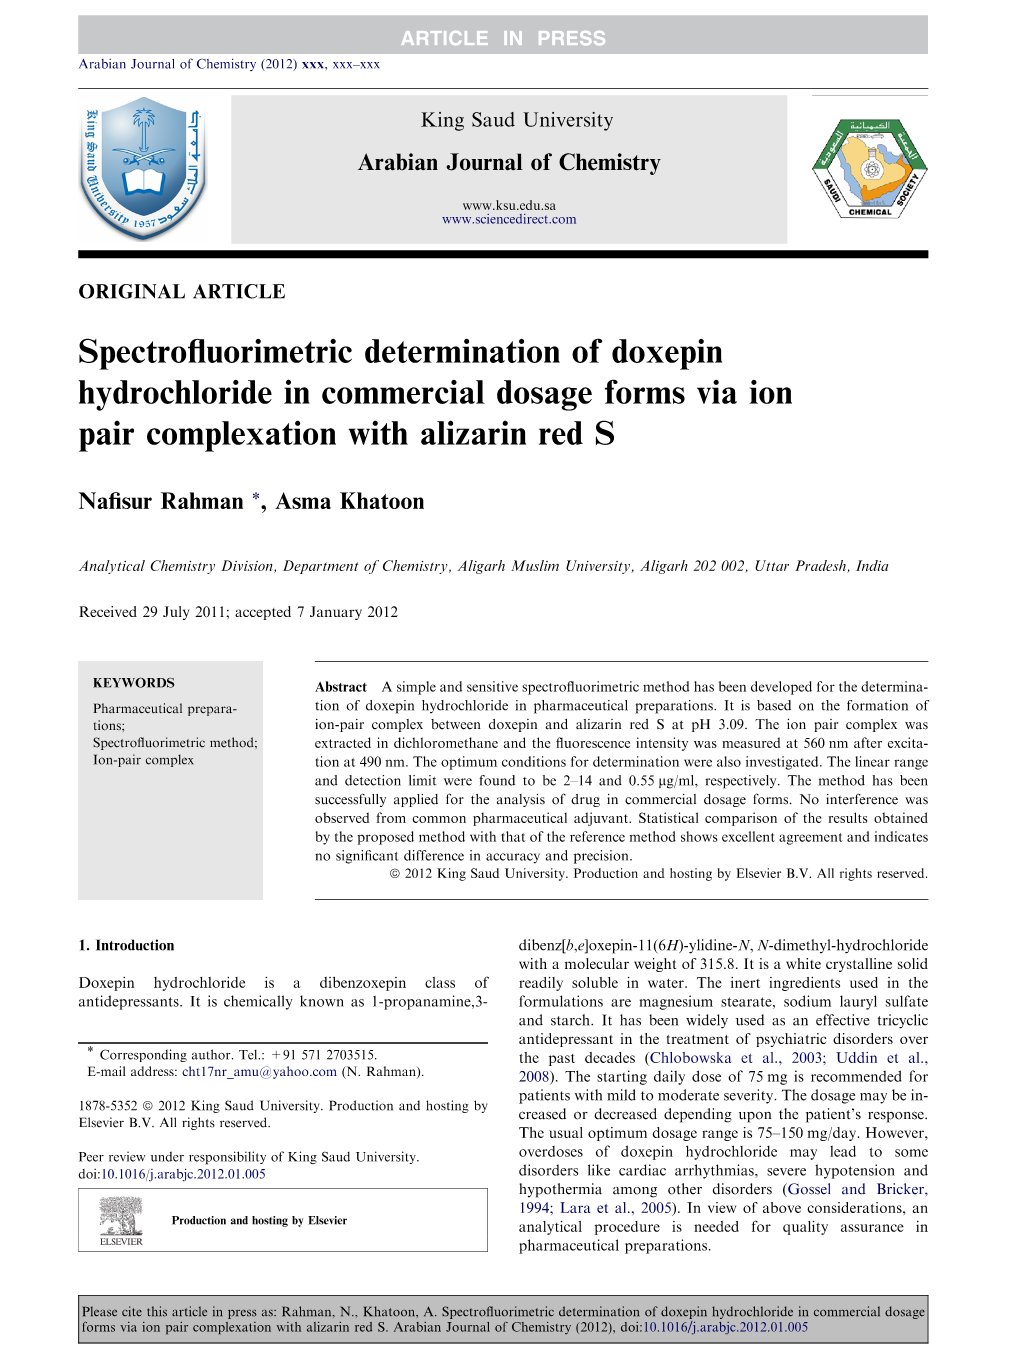 Spectrofluorimetric Determination of Doxepin